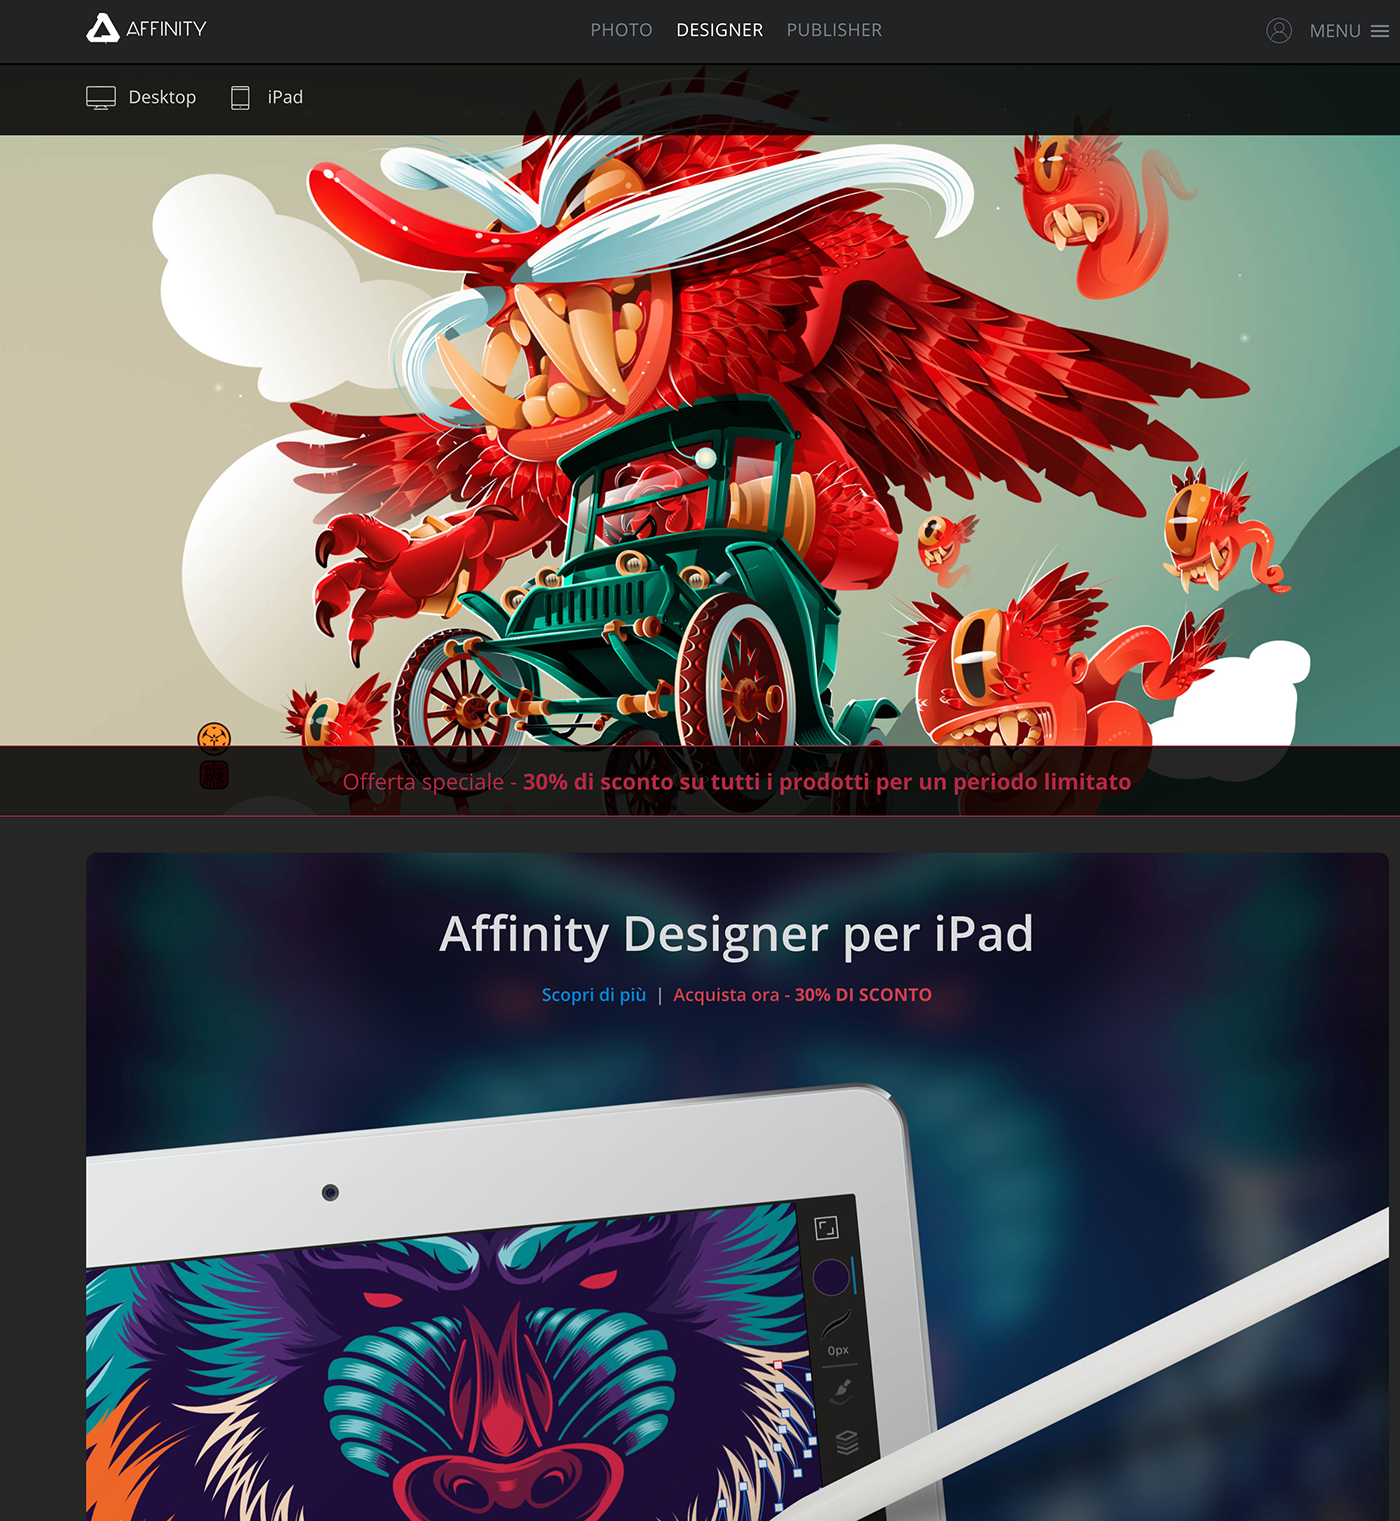 kompres miktar Nakli  Affinity Designer for iPad Adv on Behance